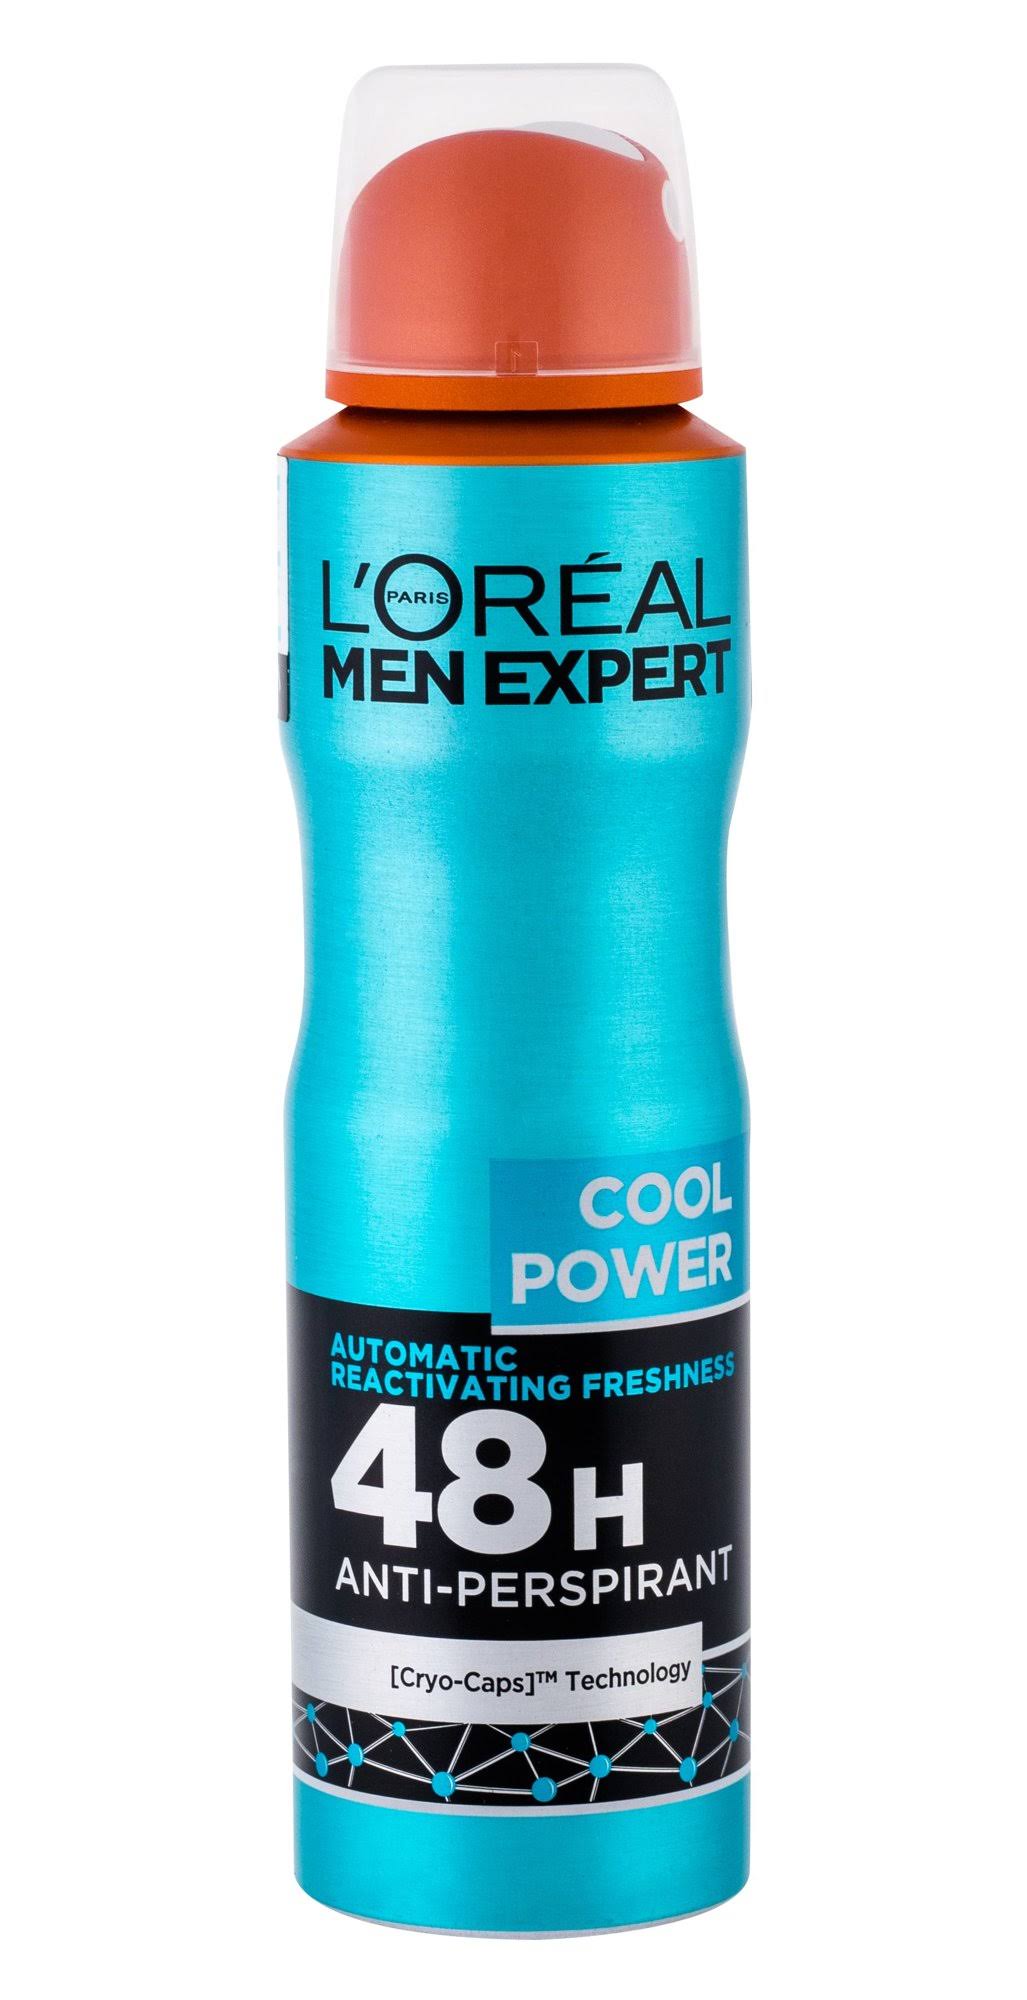 L'Oreal Paris Men Expert 48H Anti-Perspirant Deodorant Spray - Cool Power, 150ml